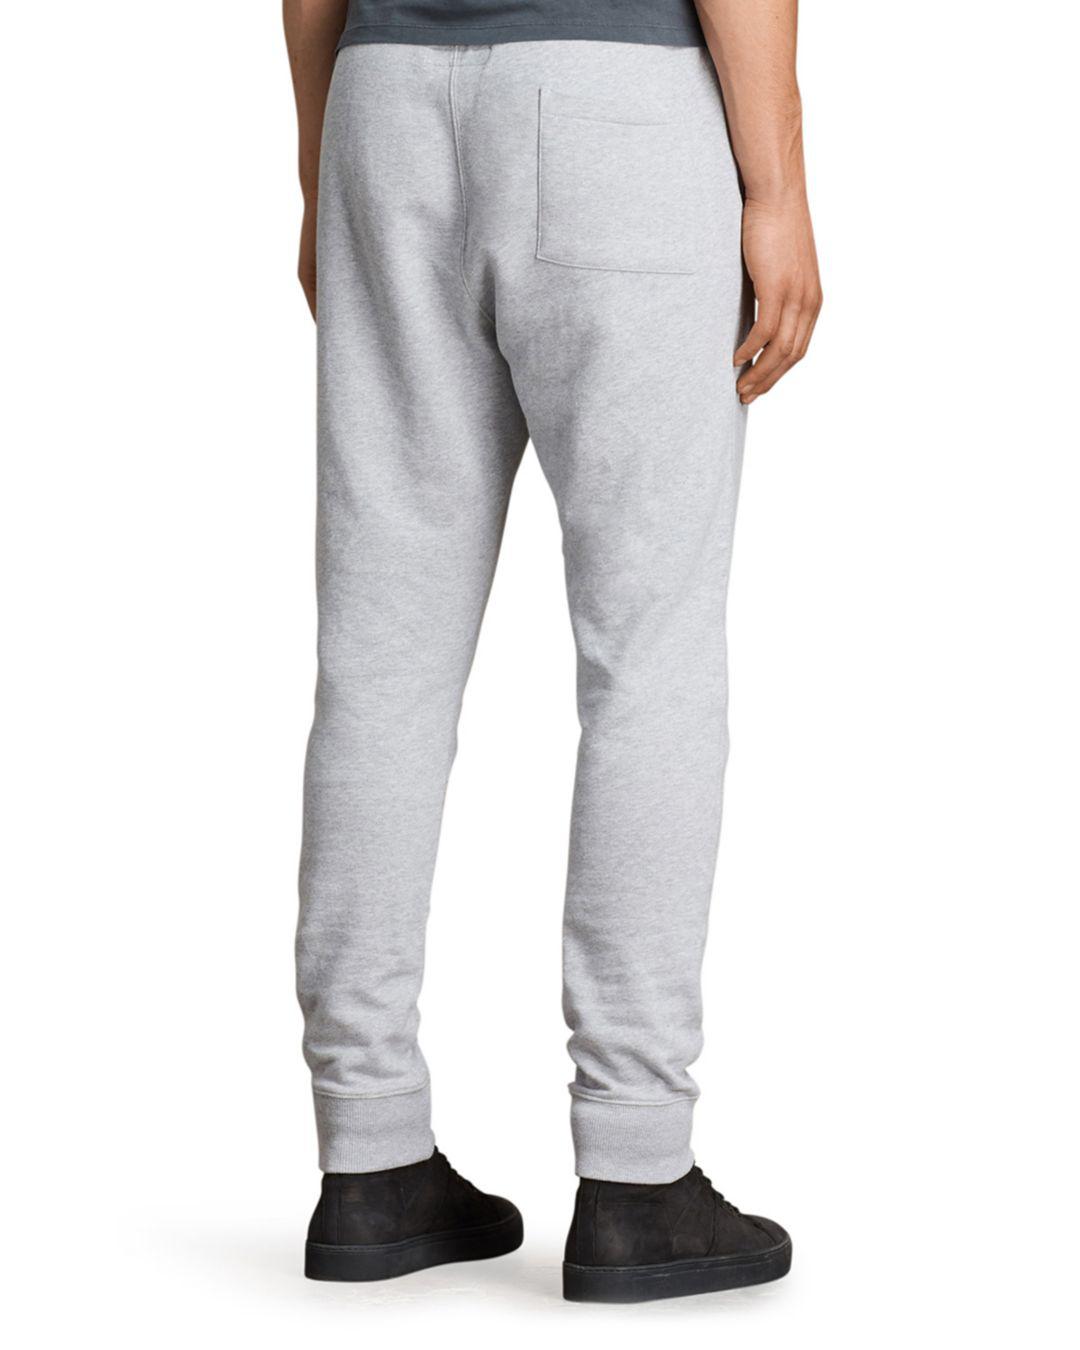 AllSaints Cotton Raven Sweatpants in Gray Marl (Gray) for Men - Lyst